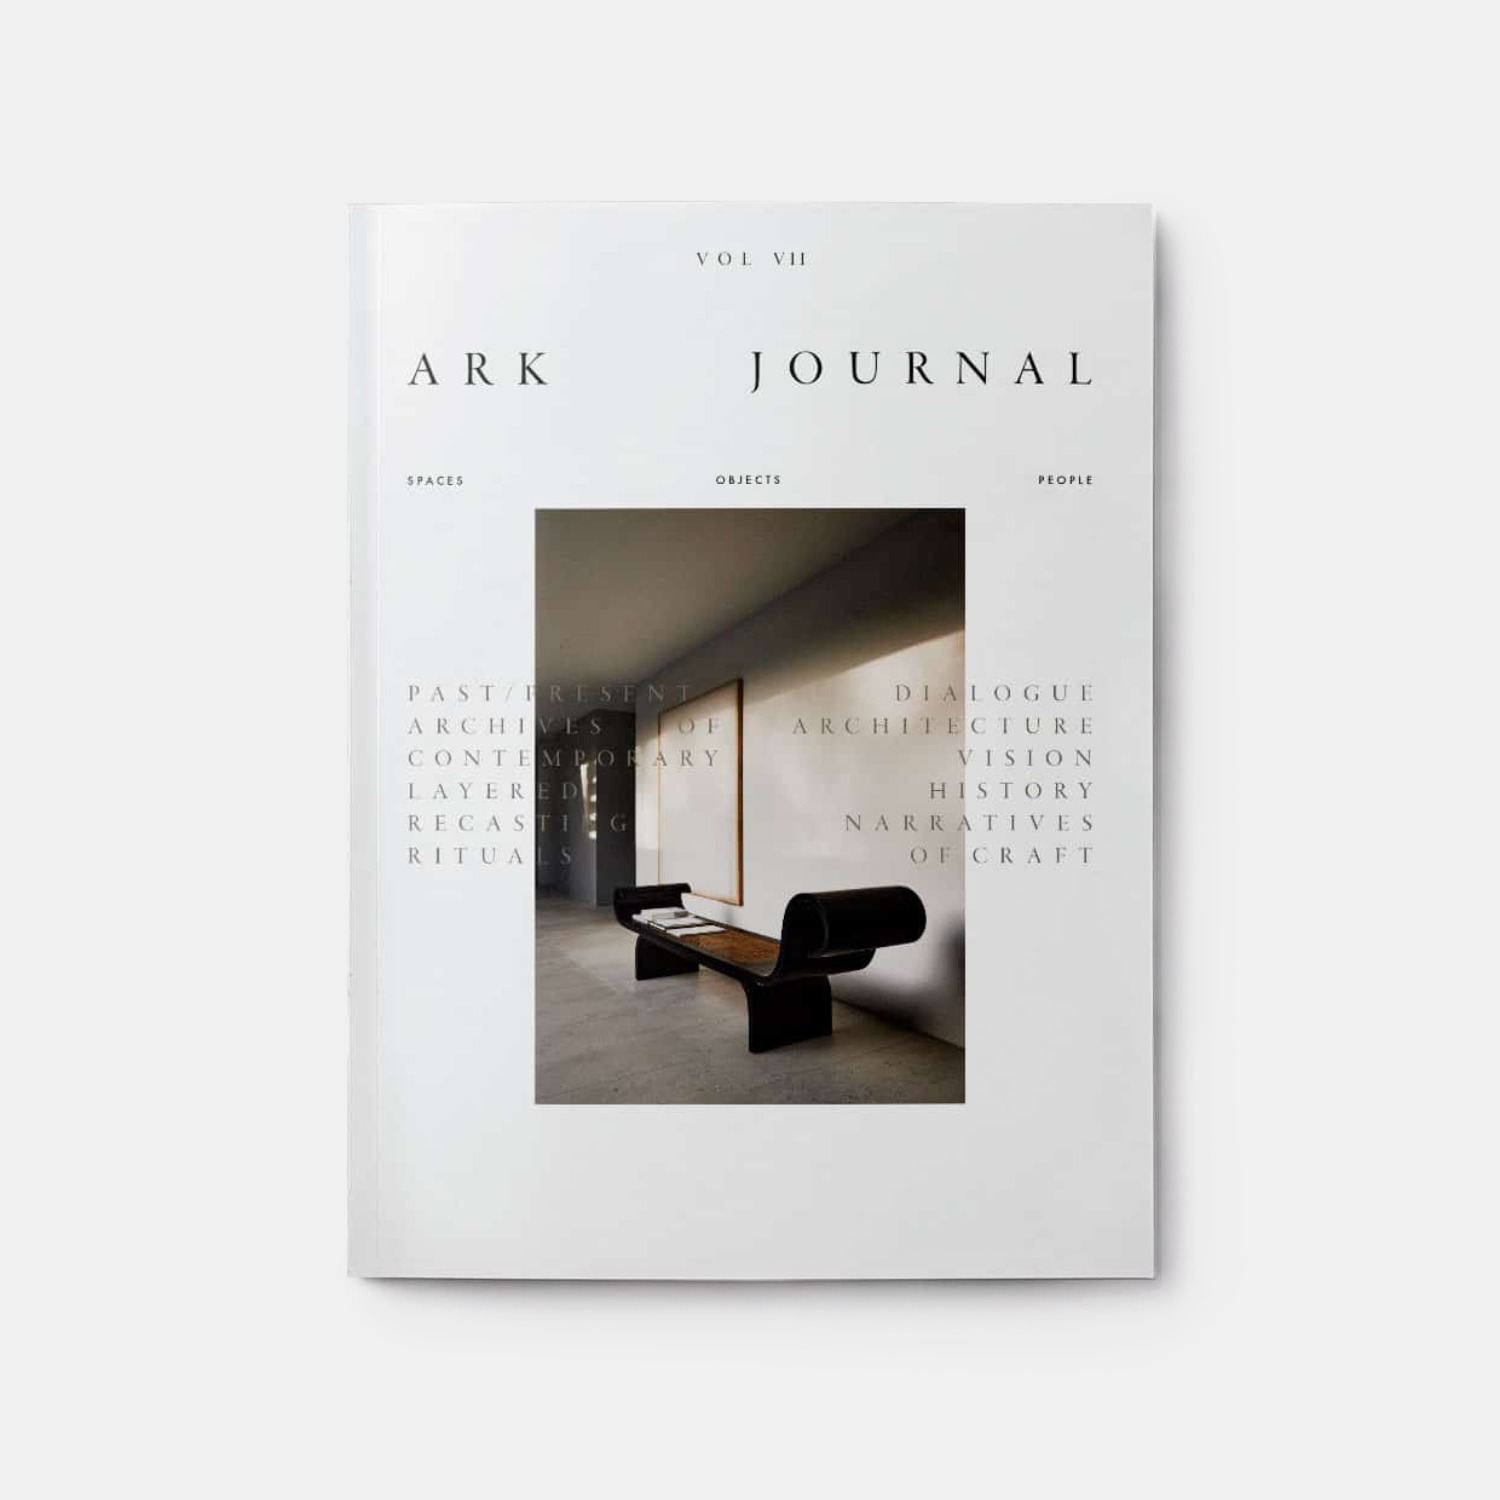 Ark Journal Vol.VII